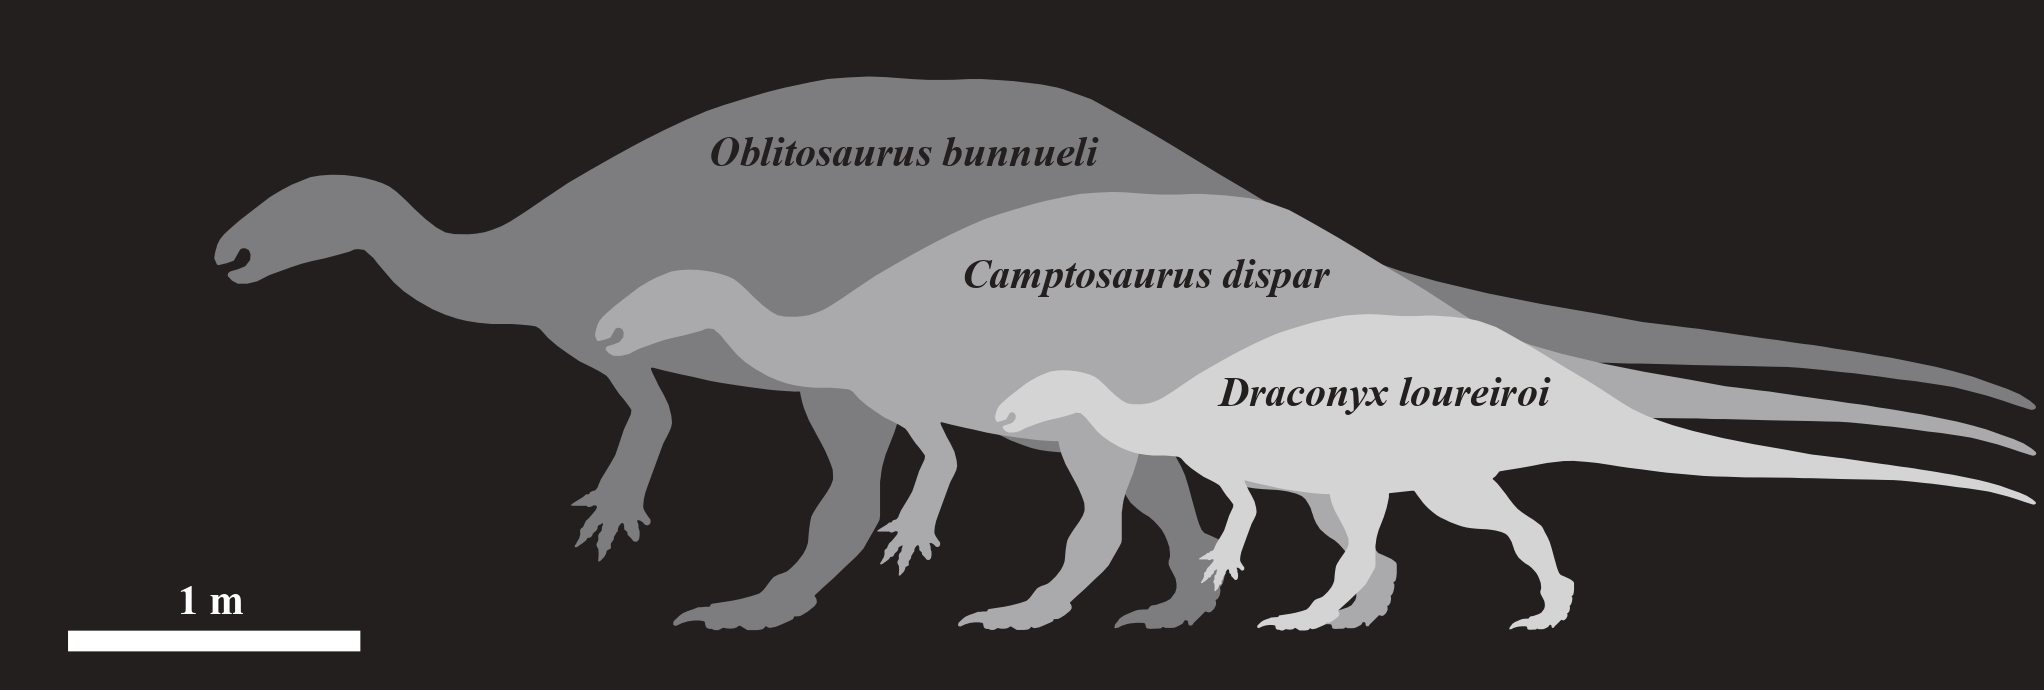 Size comparison of Oblitosaurus Bunnueli and other Upper Jurassic ornithopods.